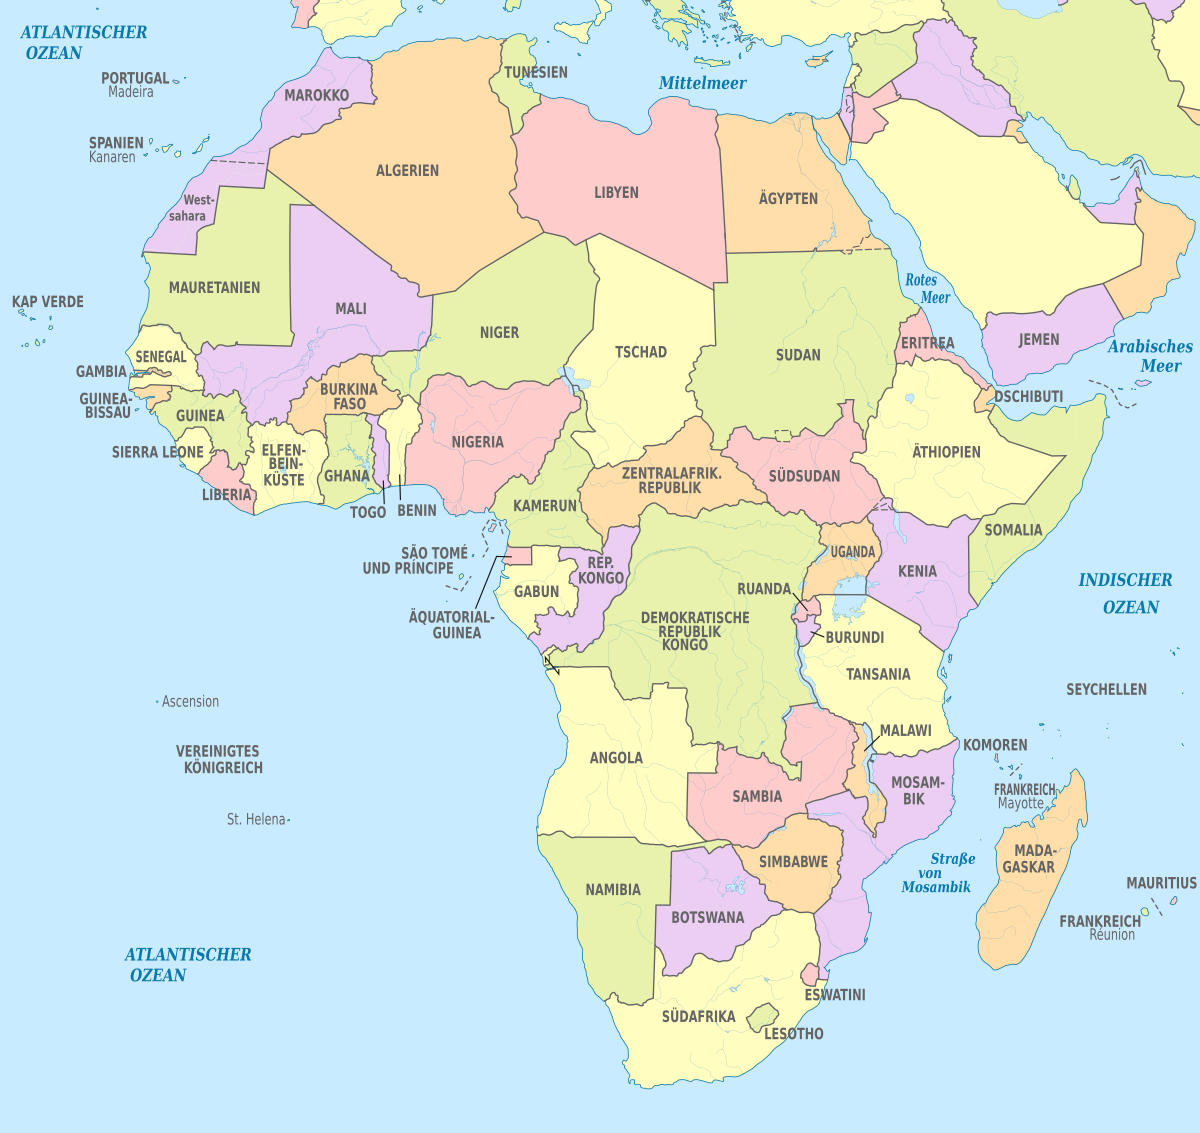 karte afrika deutsch Fichier Africa Administrative Divisions De Colored Svg Wikipedia karte afrika deutsch